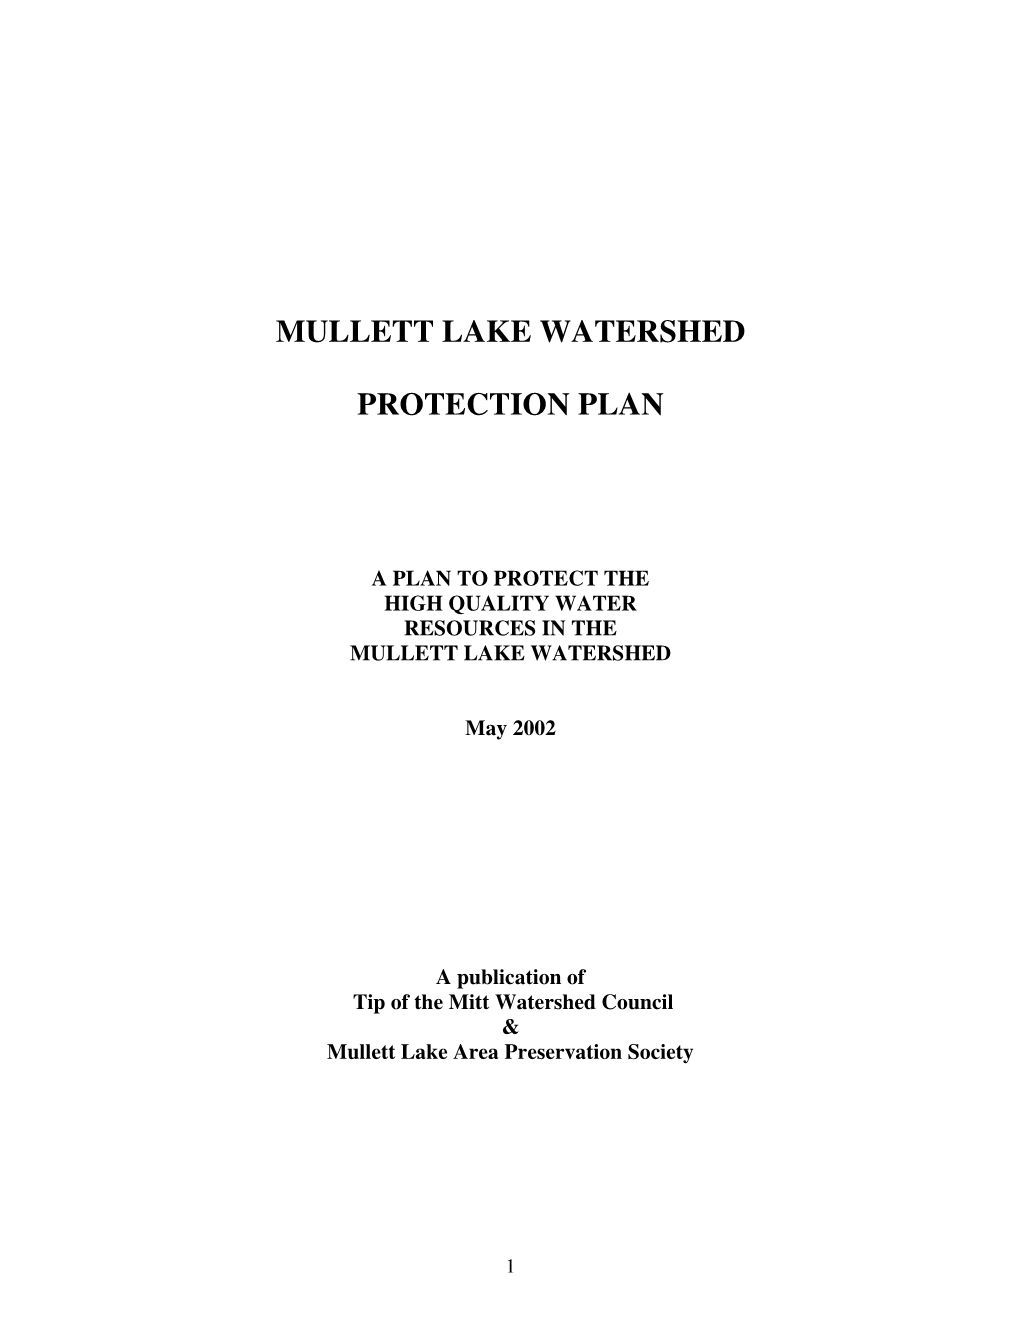 Mullett Lake Watershed Protection Plan